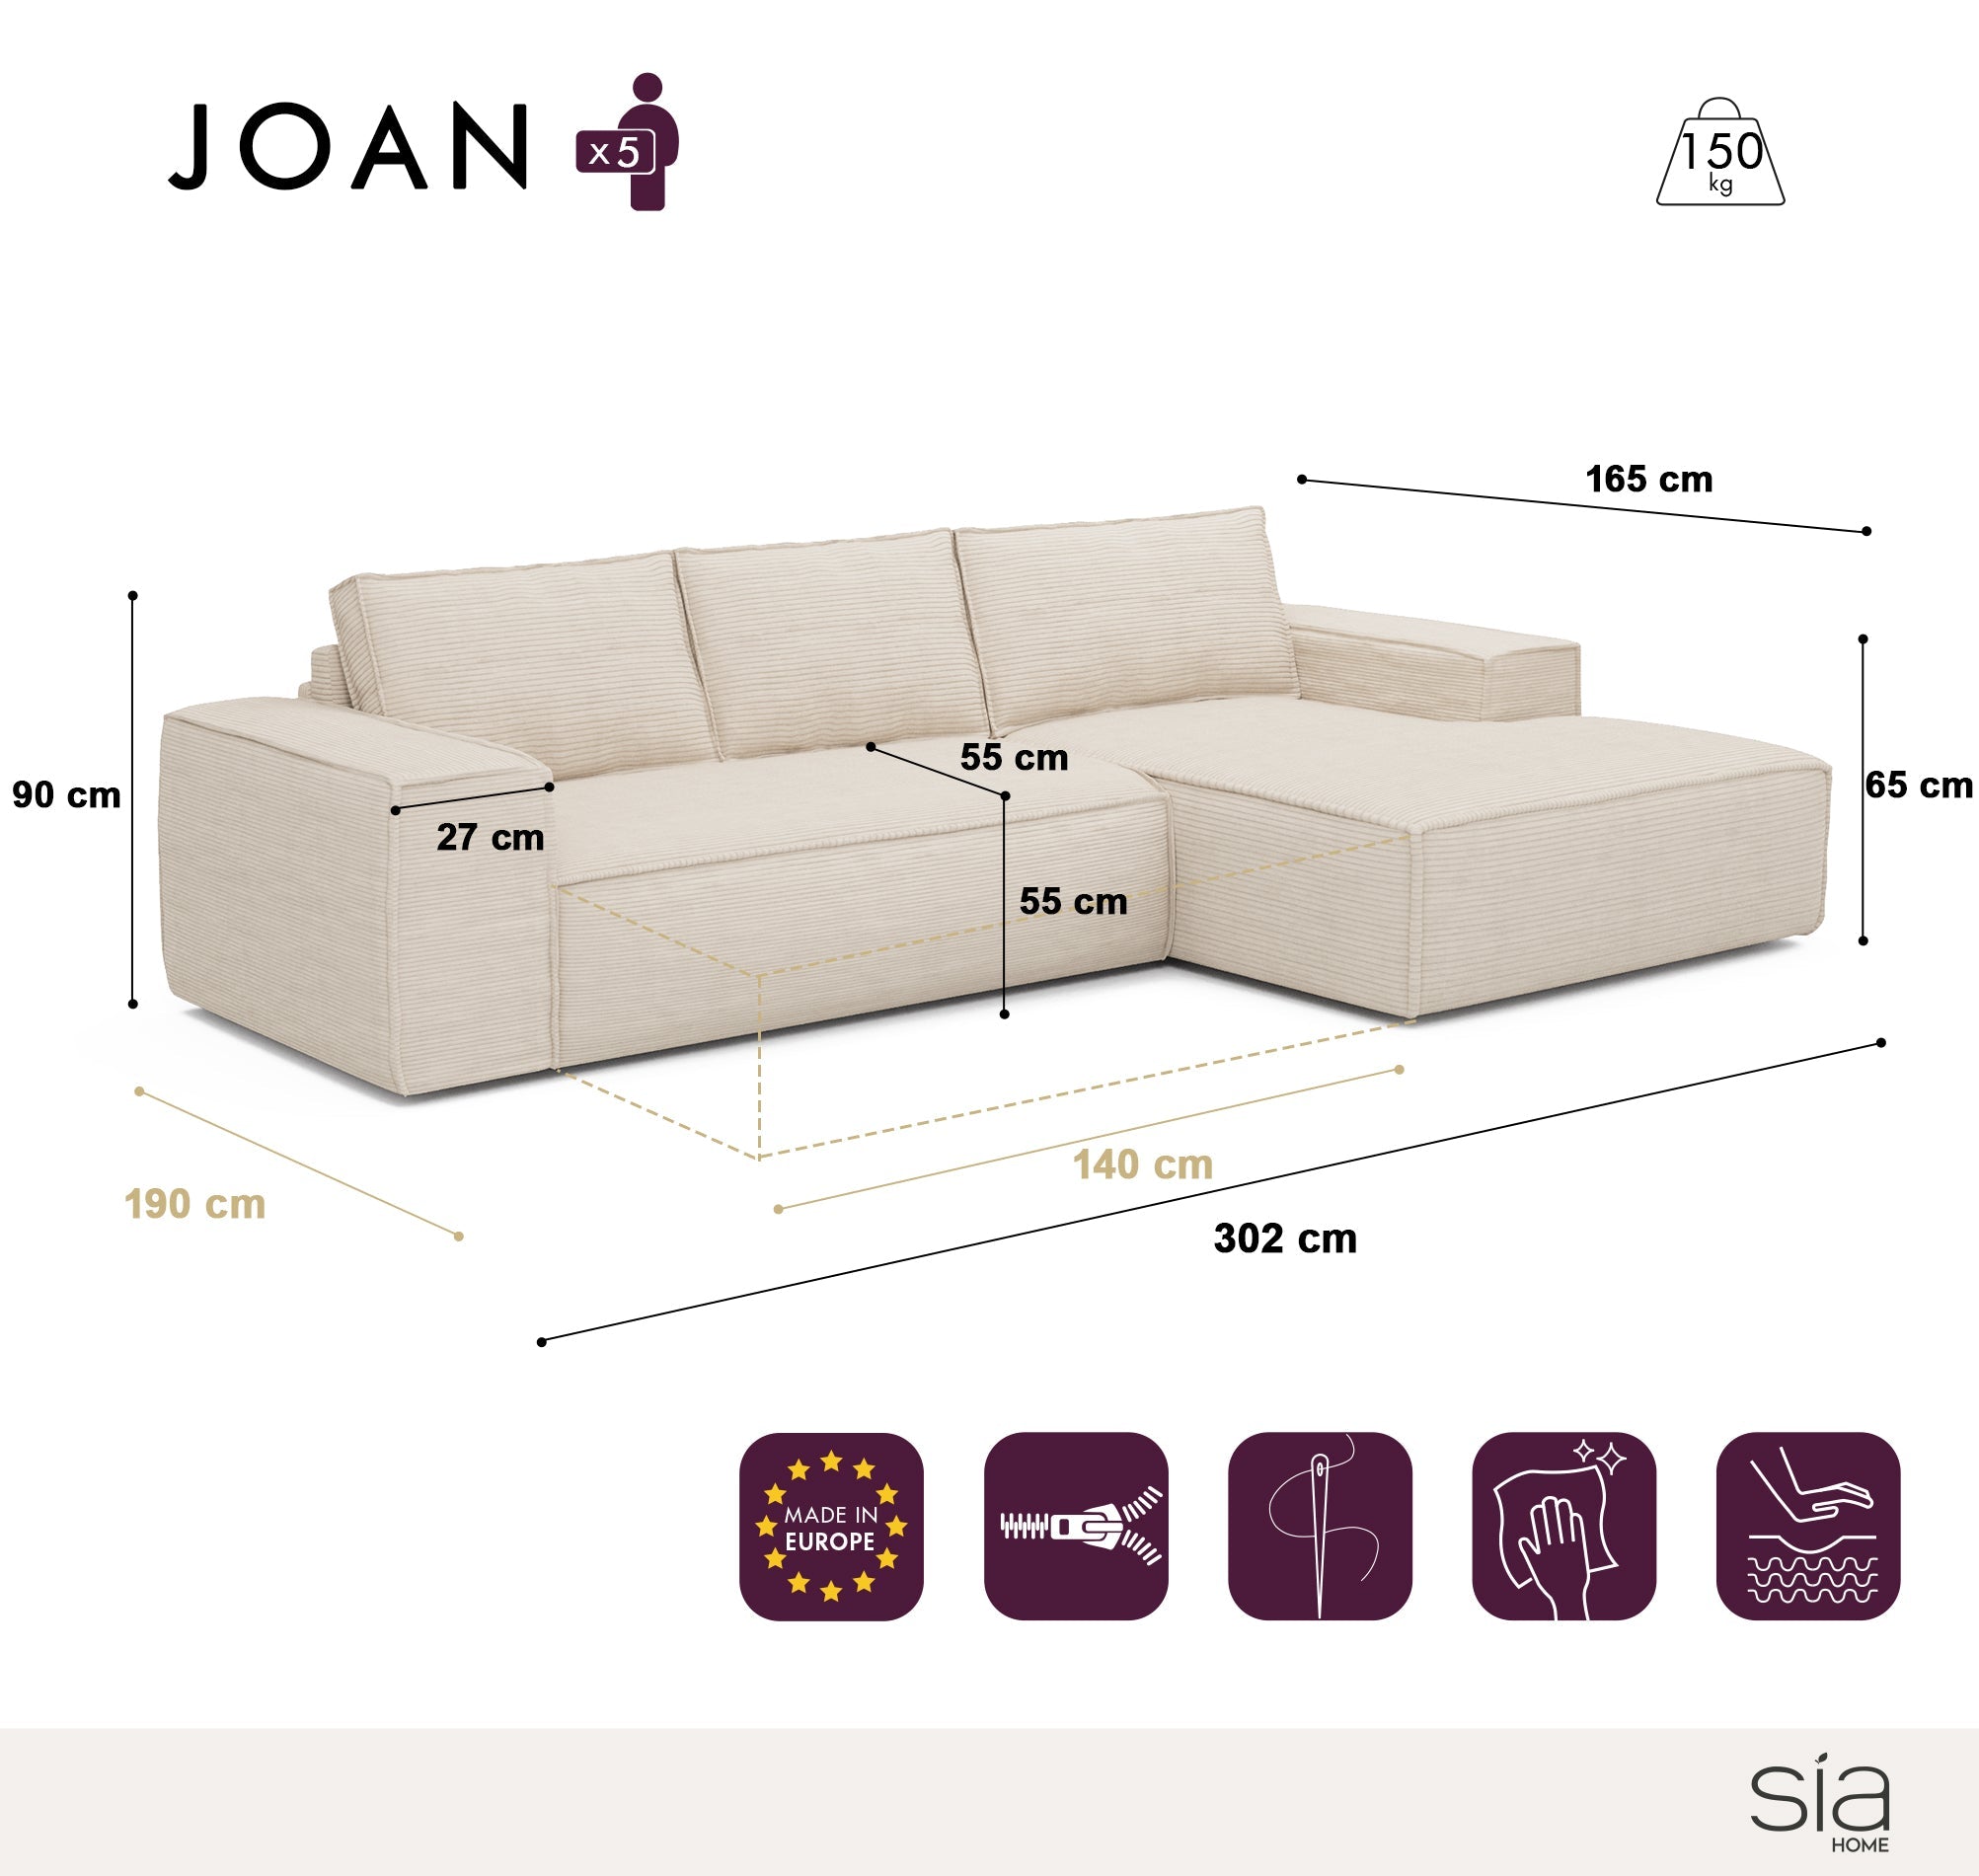 Canapé Convertible d'Angle droit Joan